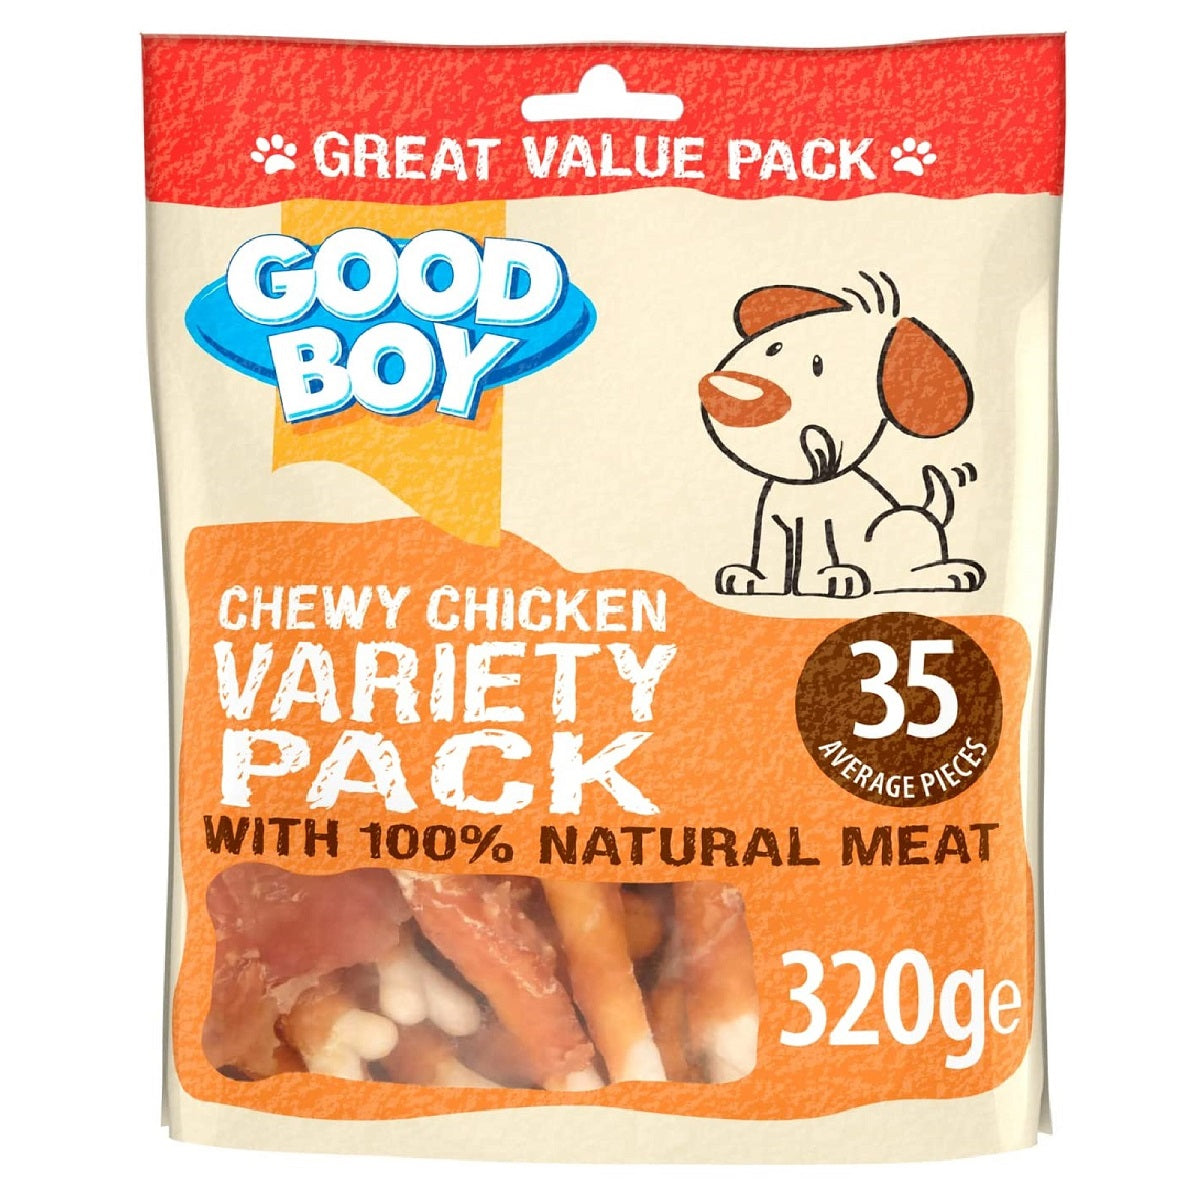 Good Boy - Chewy Chicken Variety Pack (320g)